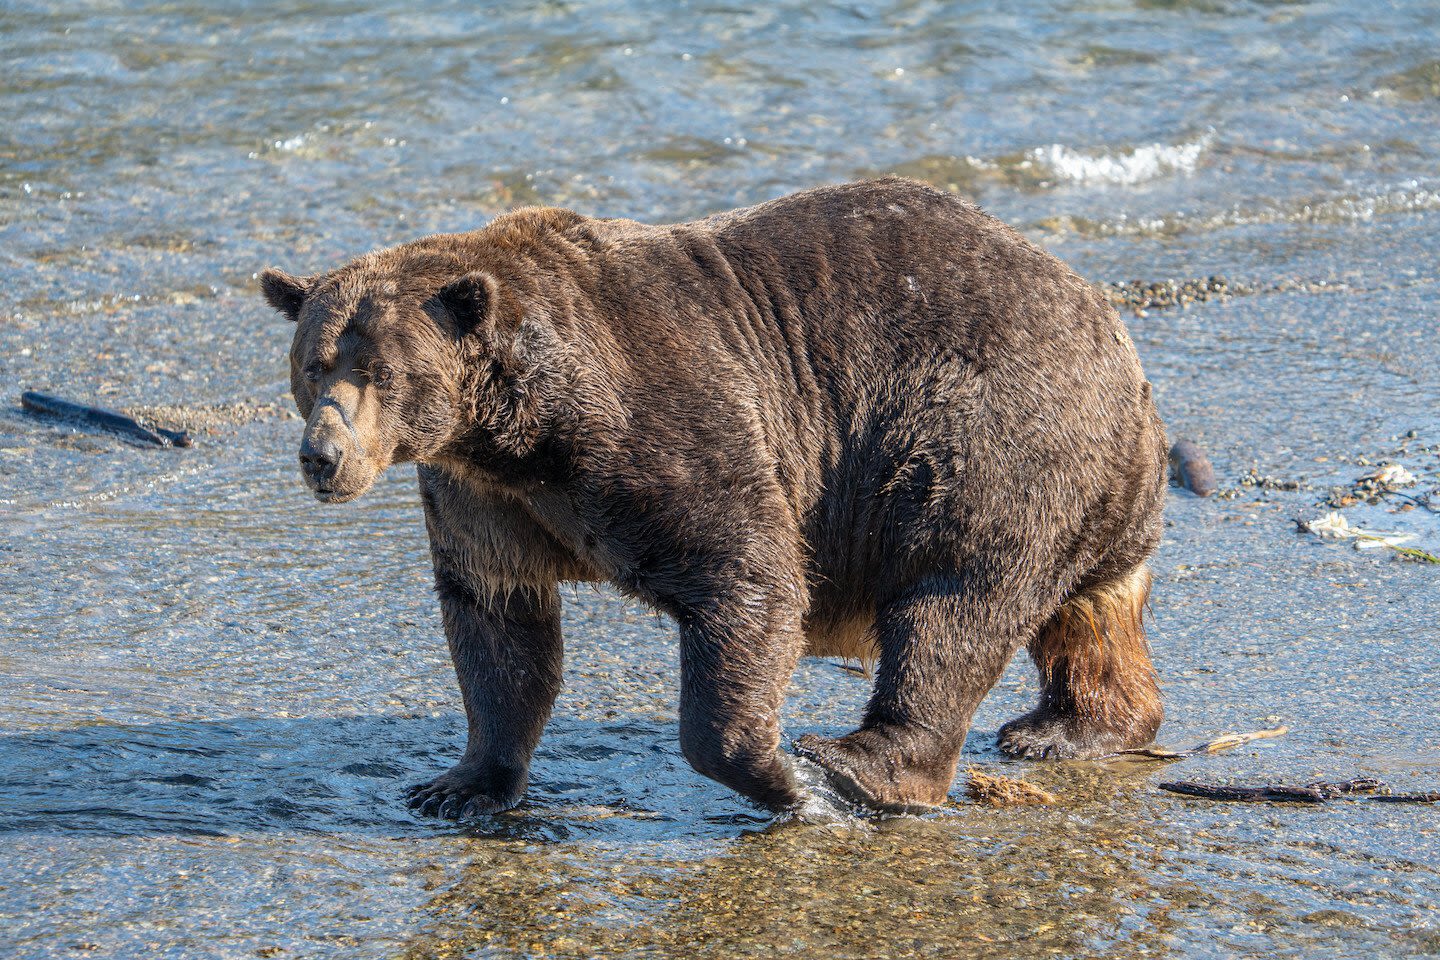 A violent event occurred on Alaska's fat bear livestream